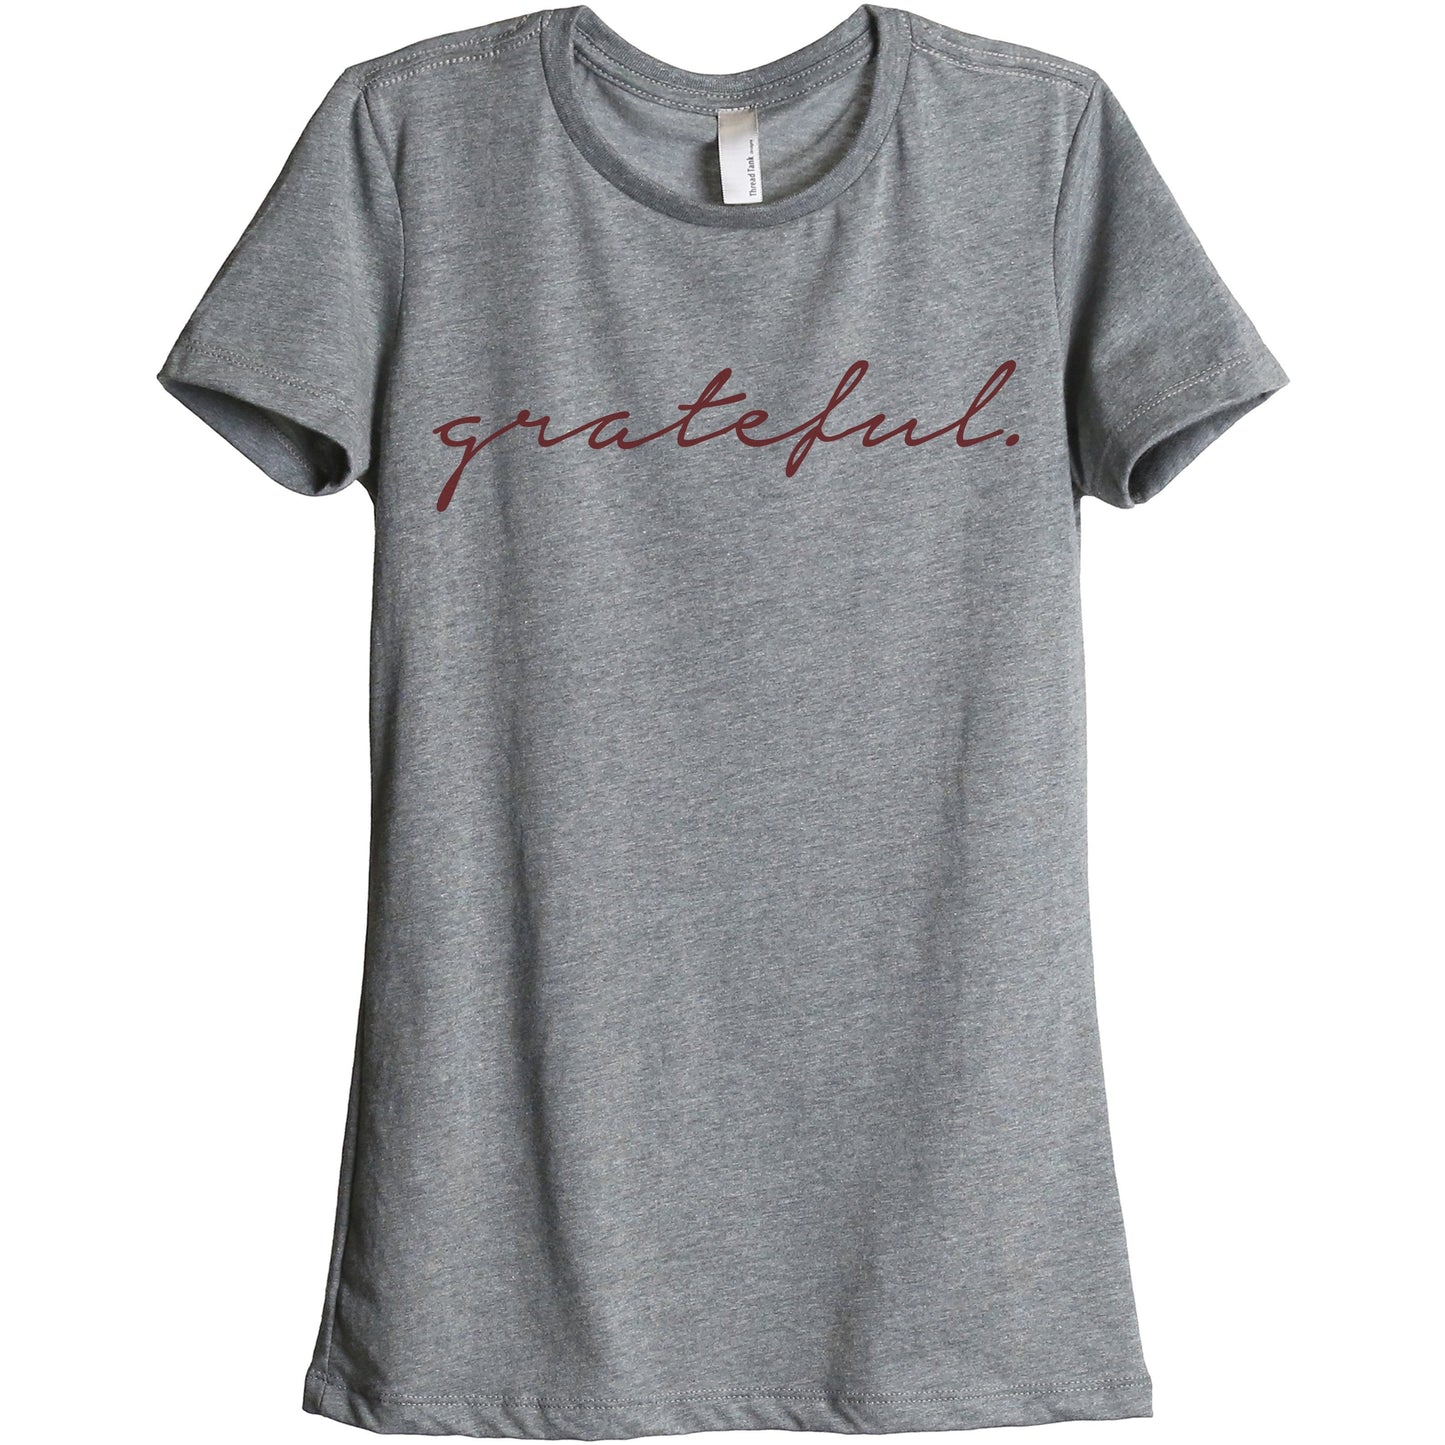 Grateful Women's Relaxed Crewneck T-Shirt Top Tee Heather Grey